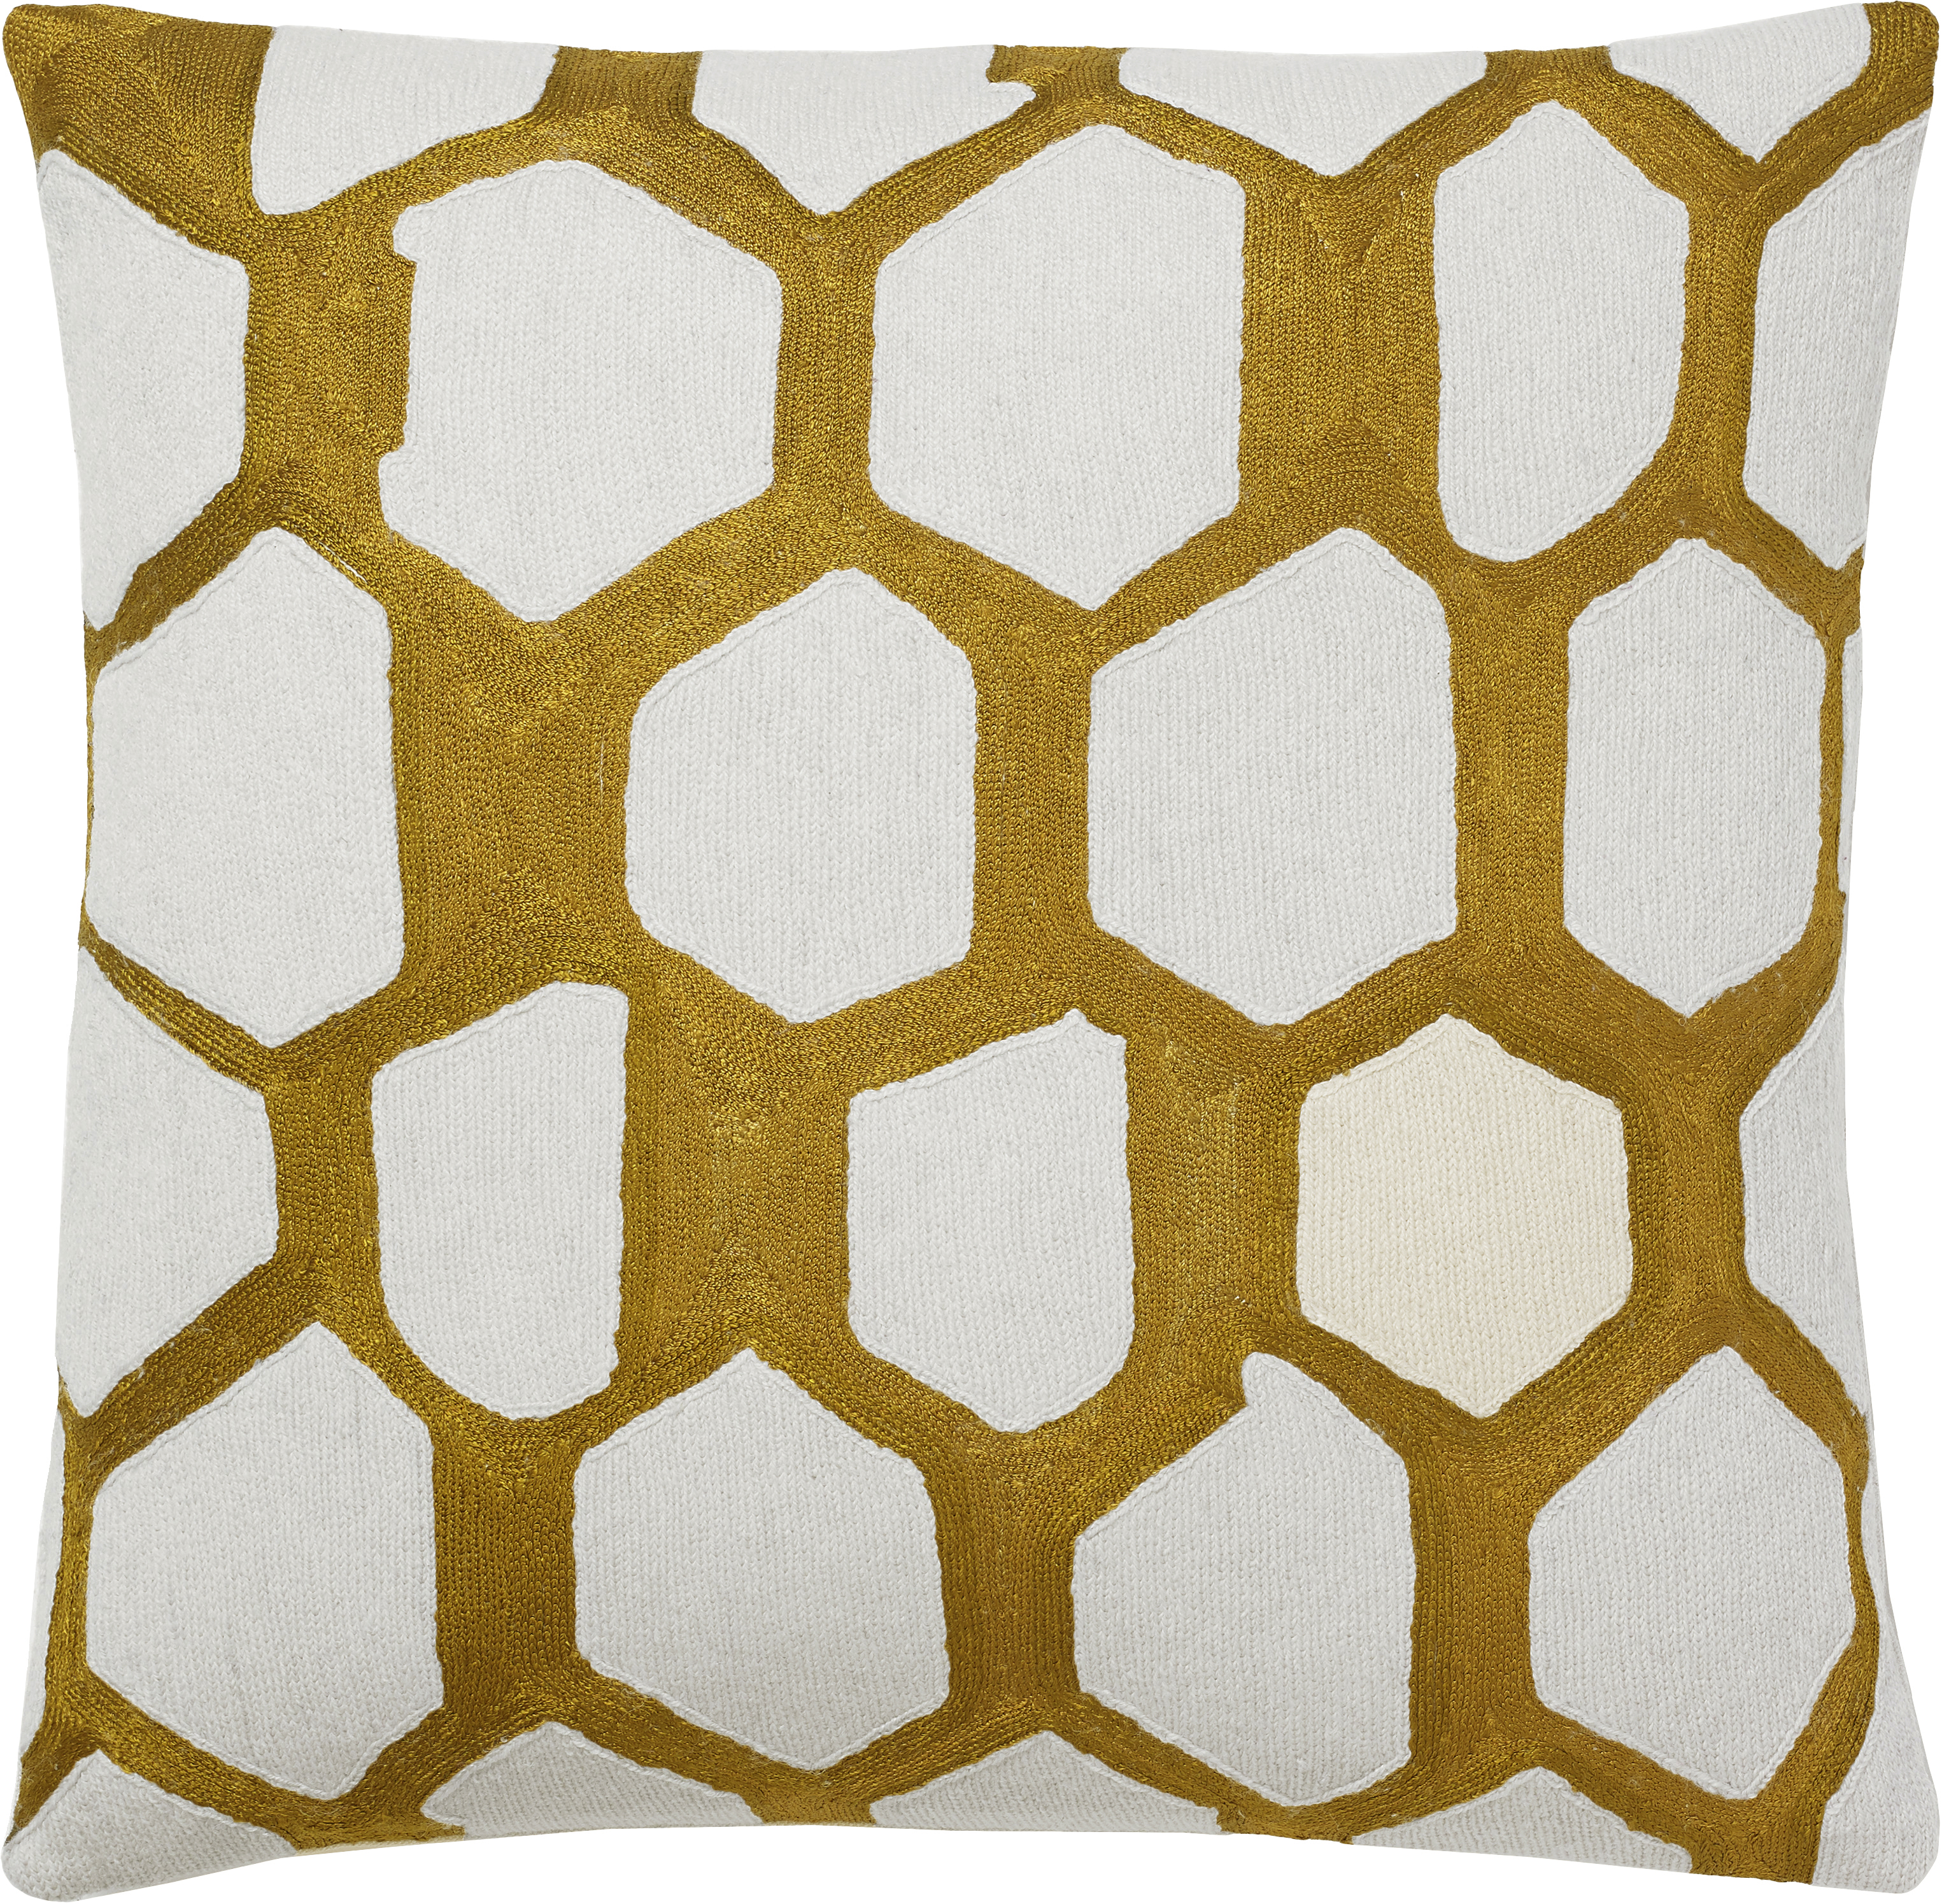 Hand-Embroidered Chain Stitch Pillows: 18x18 :: Quartz Judy Ross Textiles